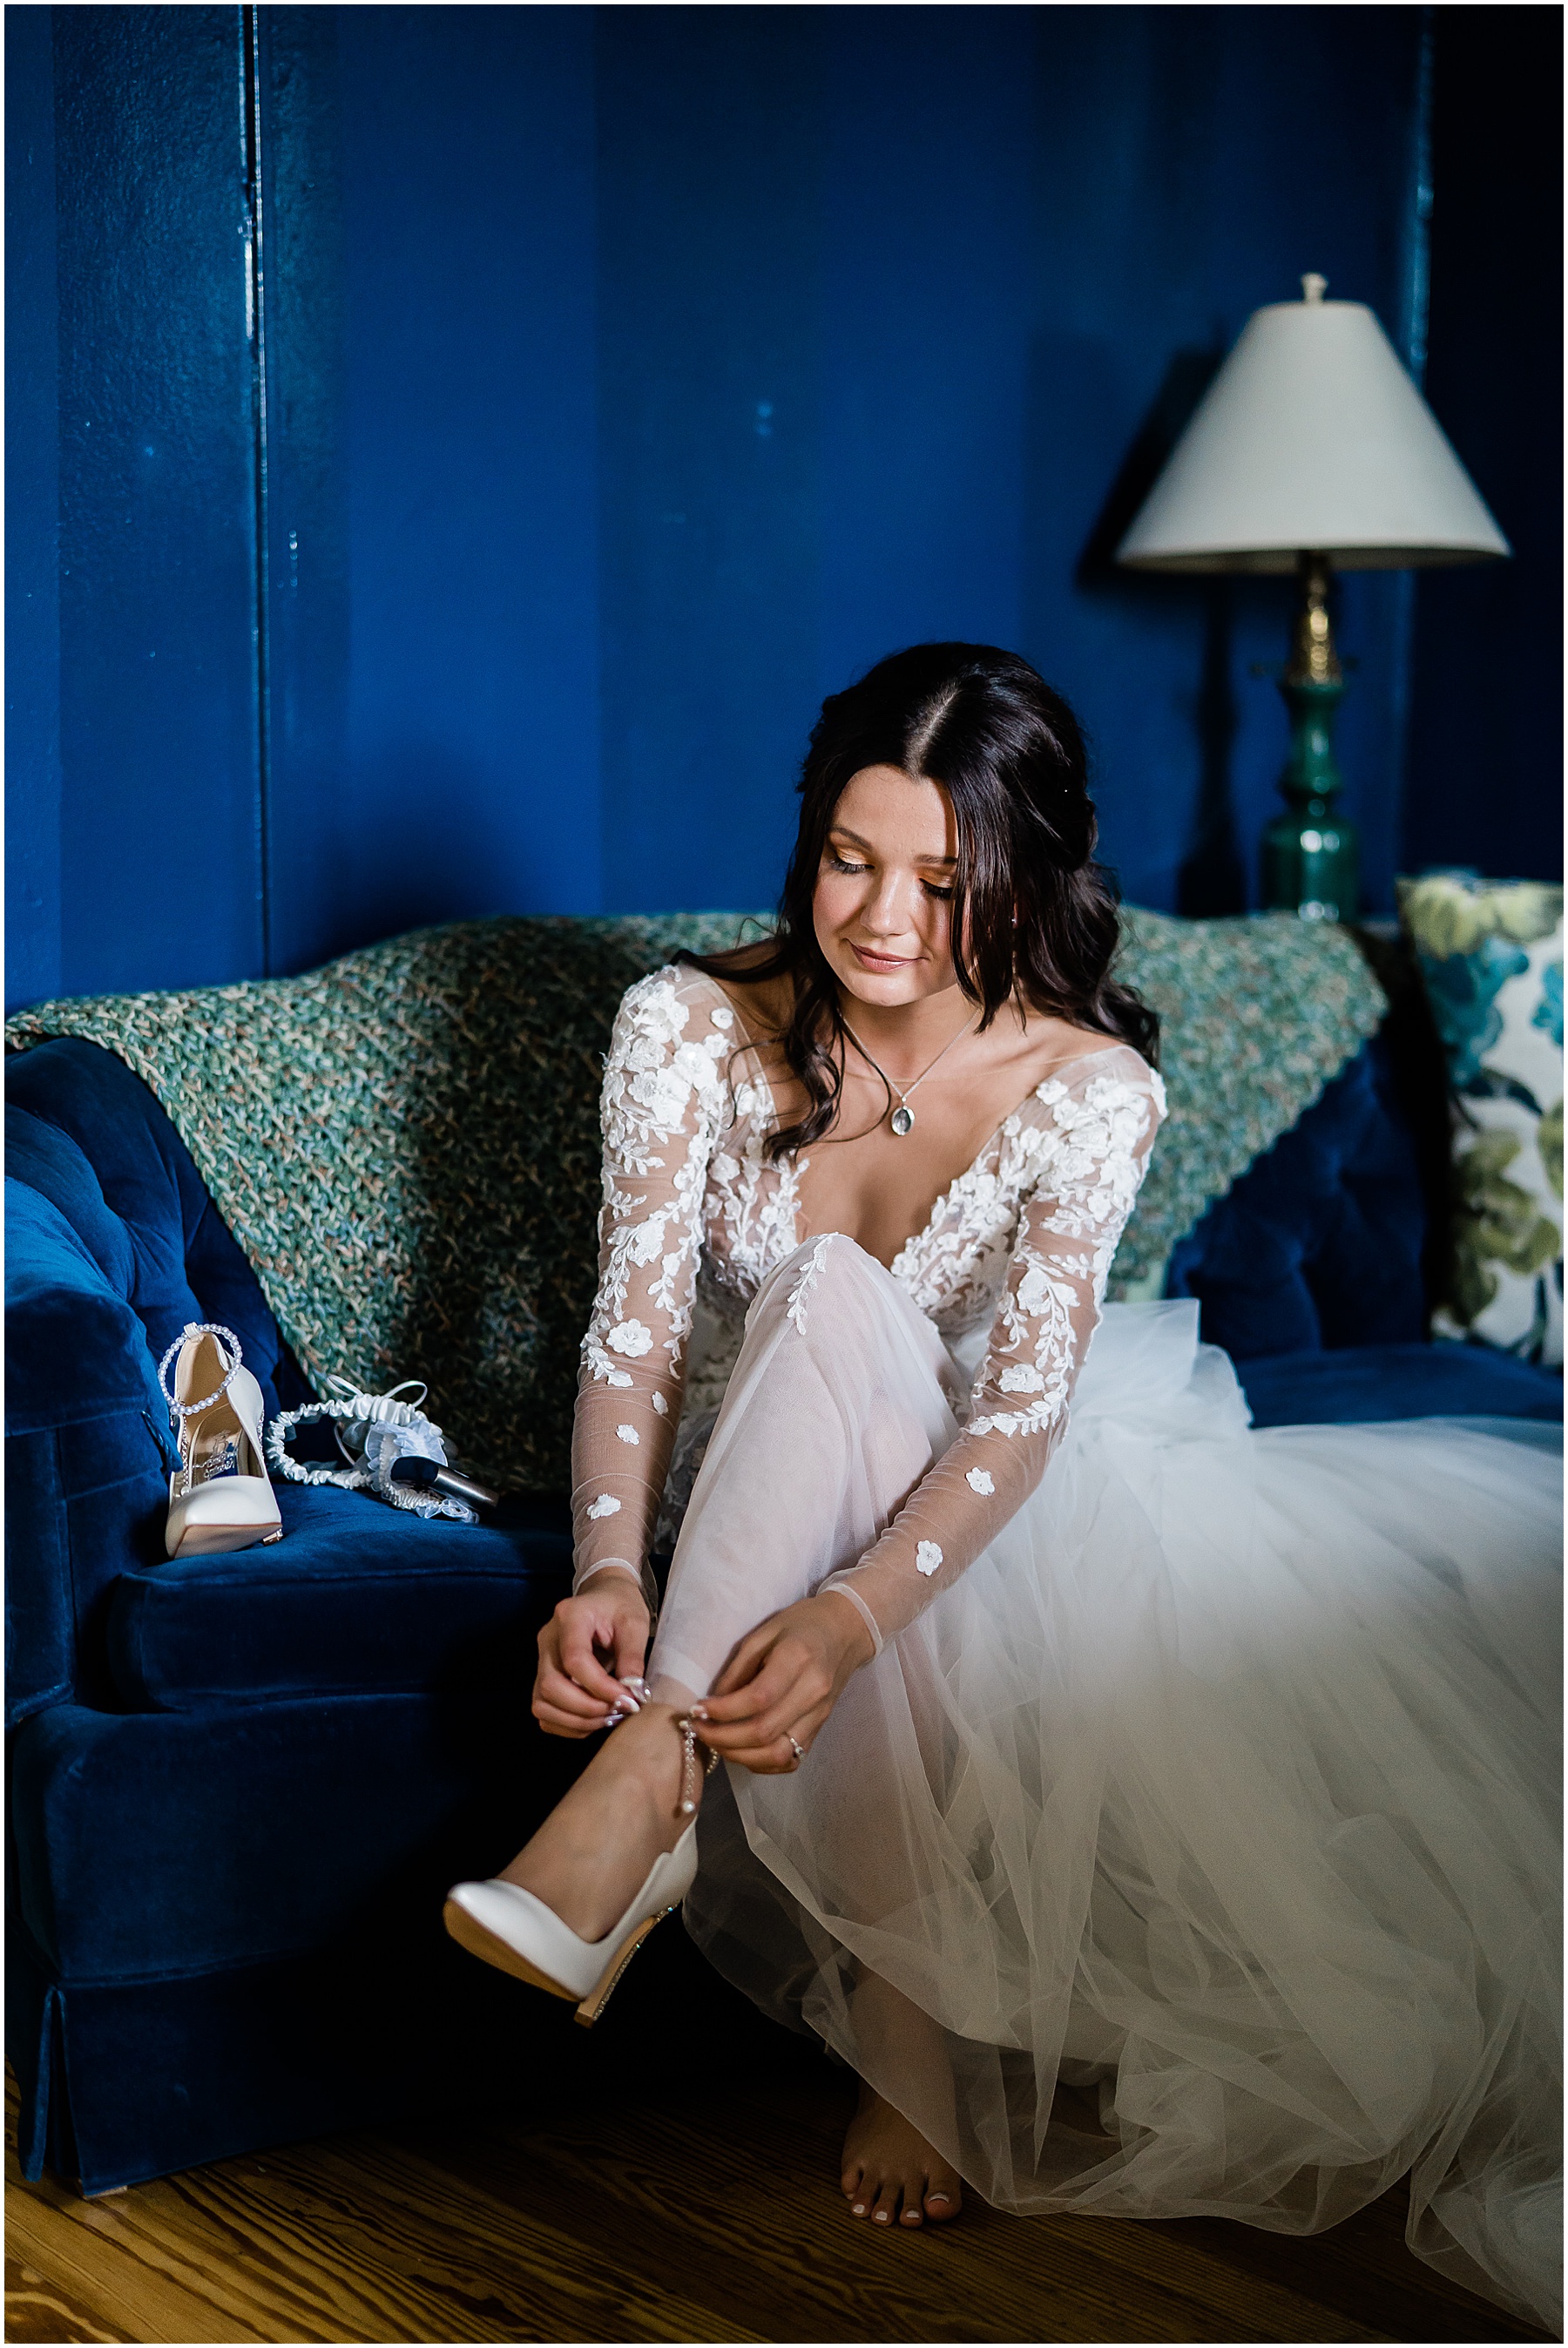 Fort Wayne wedding photographers capture bride putting on shoes before walking down aisle